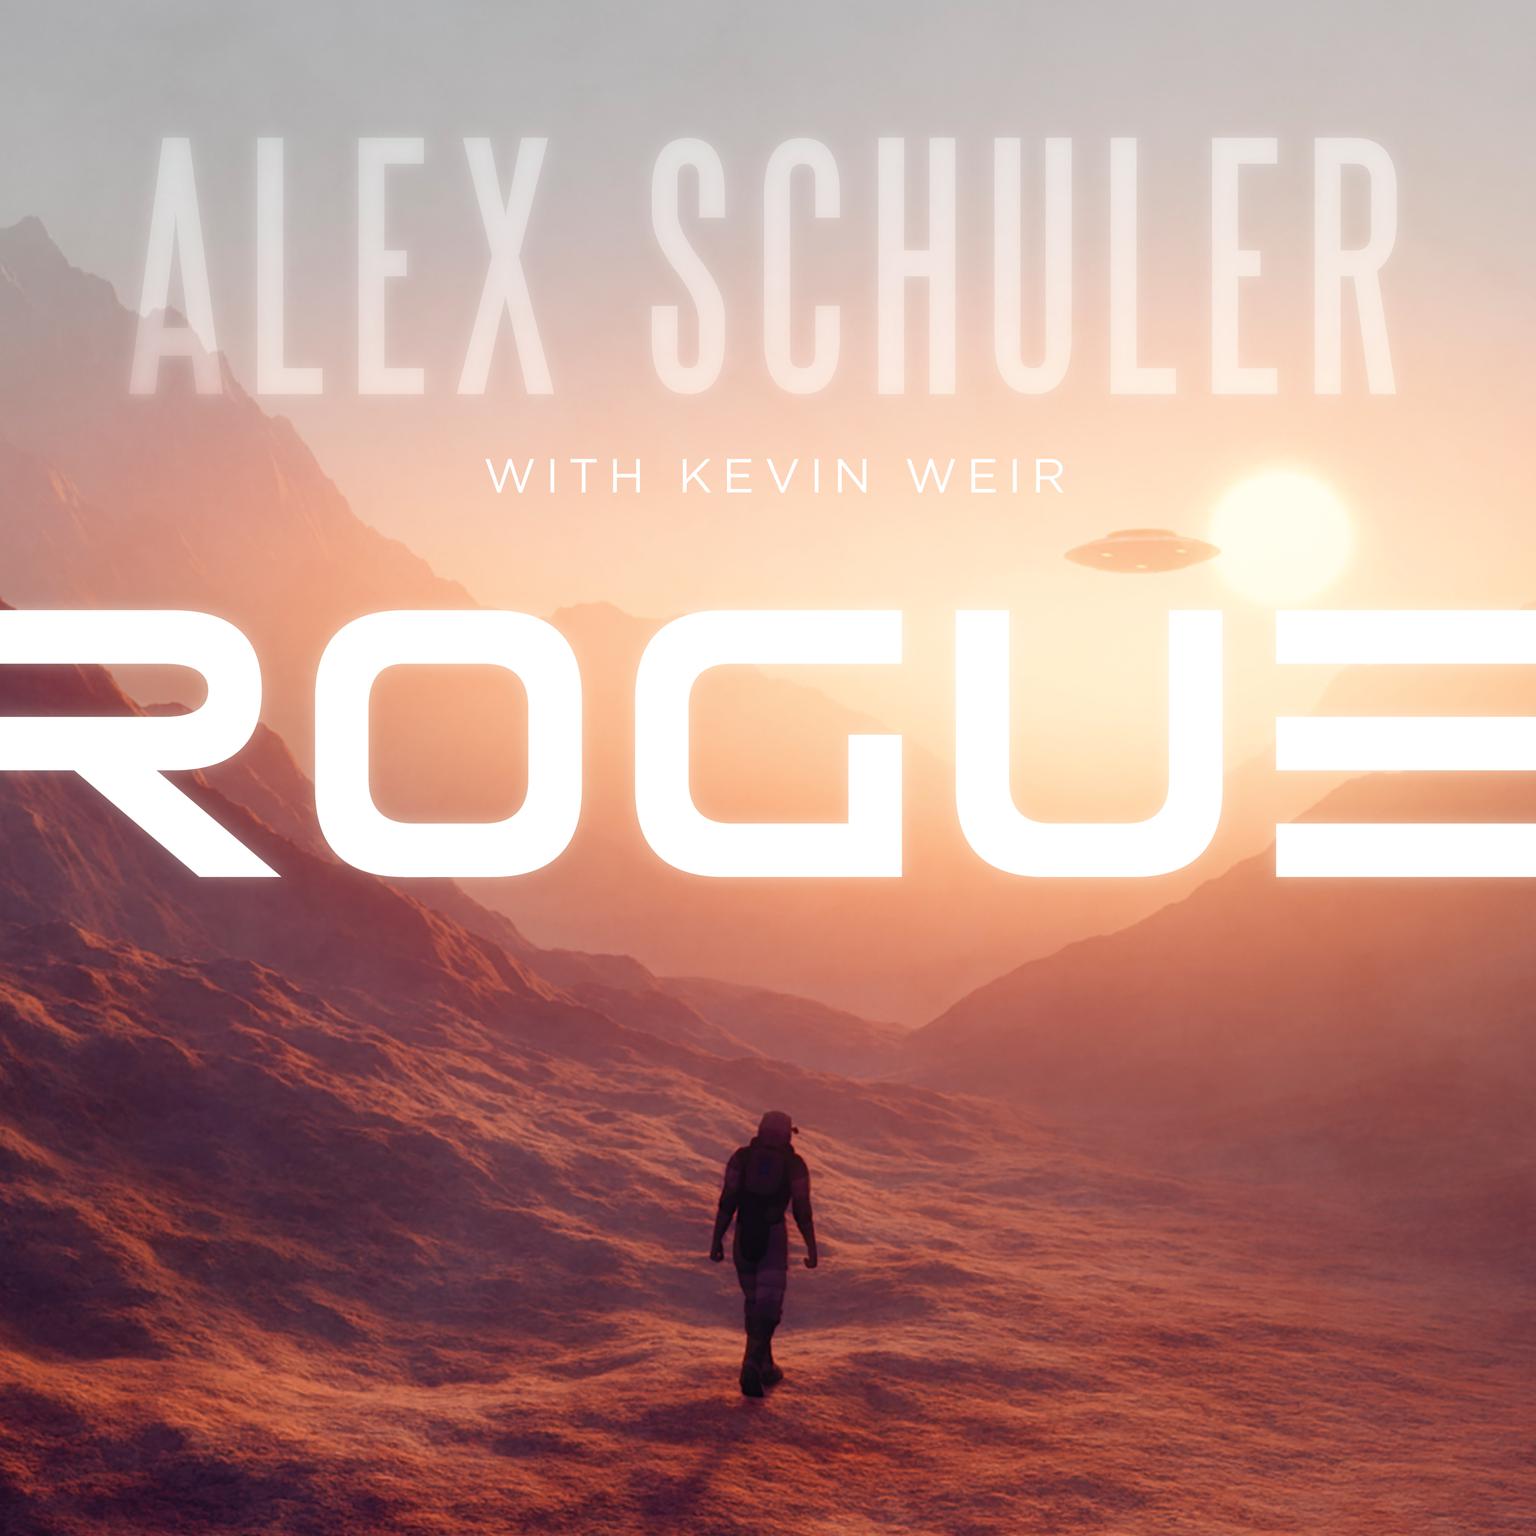 Rogue Audiobook, by Alex Schuler